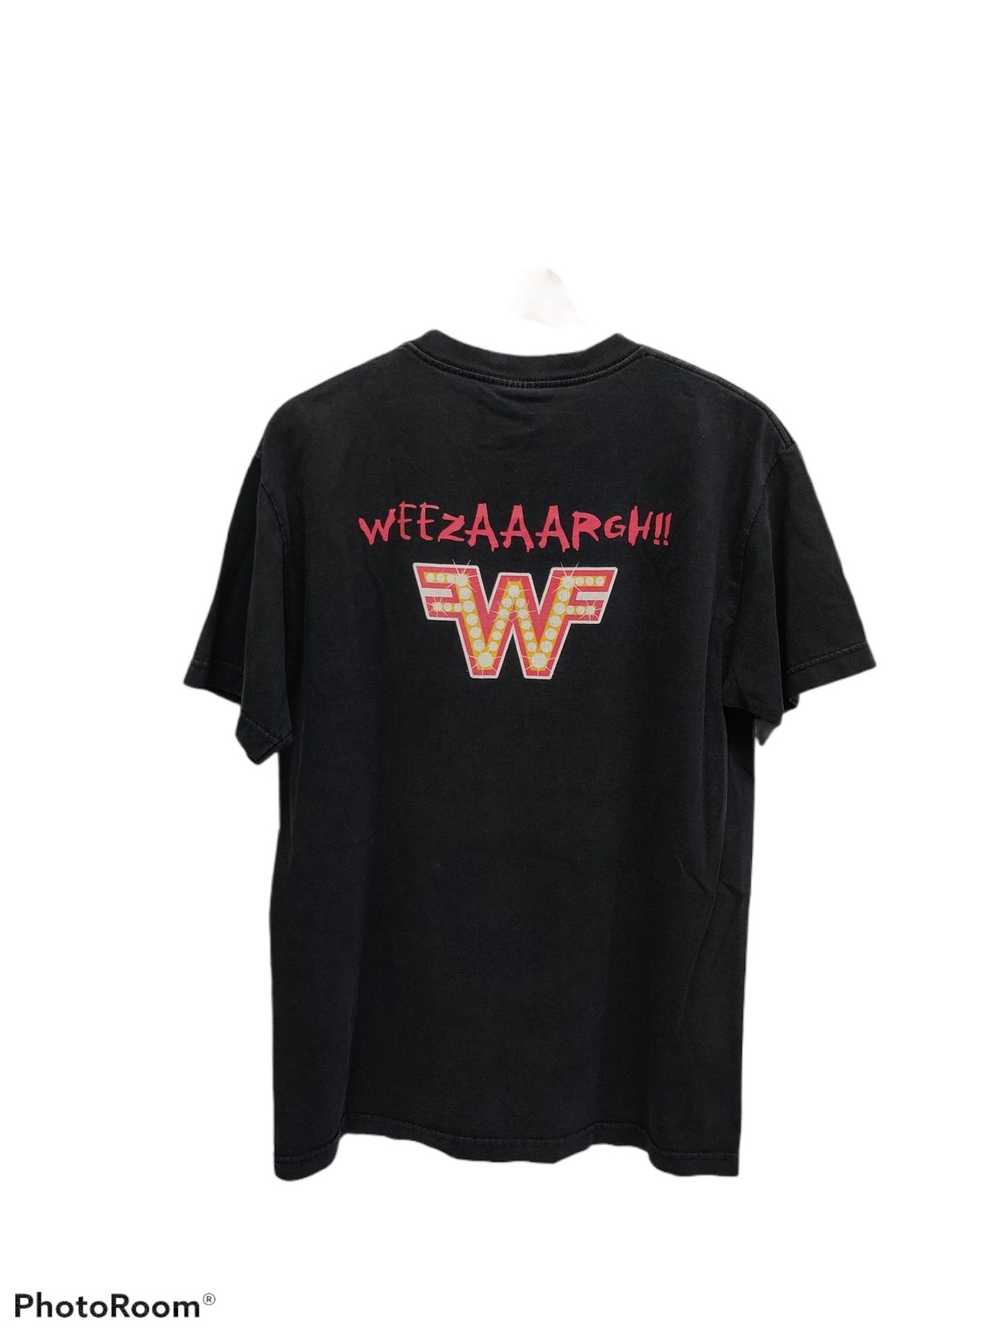 Band Tees × Vintage Rare Vintage Weezer band shirt - image 3